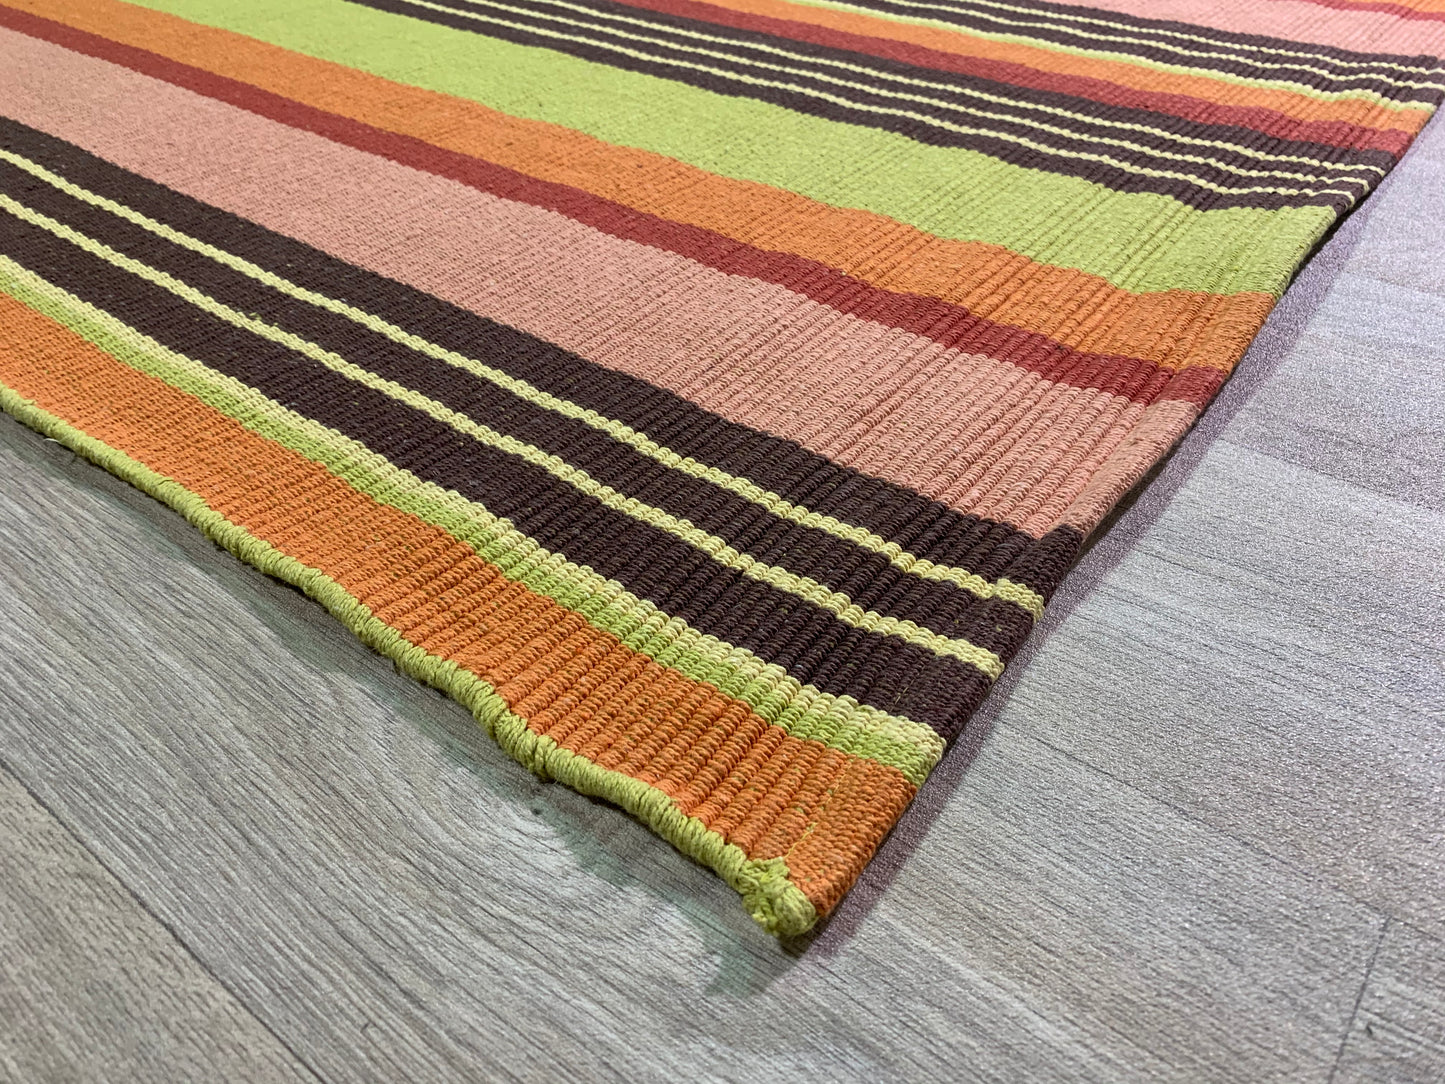 DB-516: Colorful striped rug